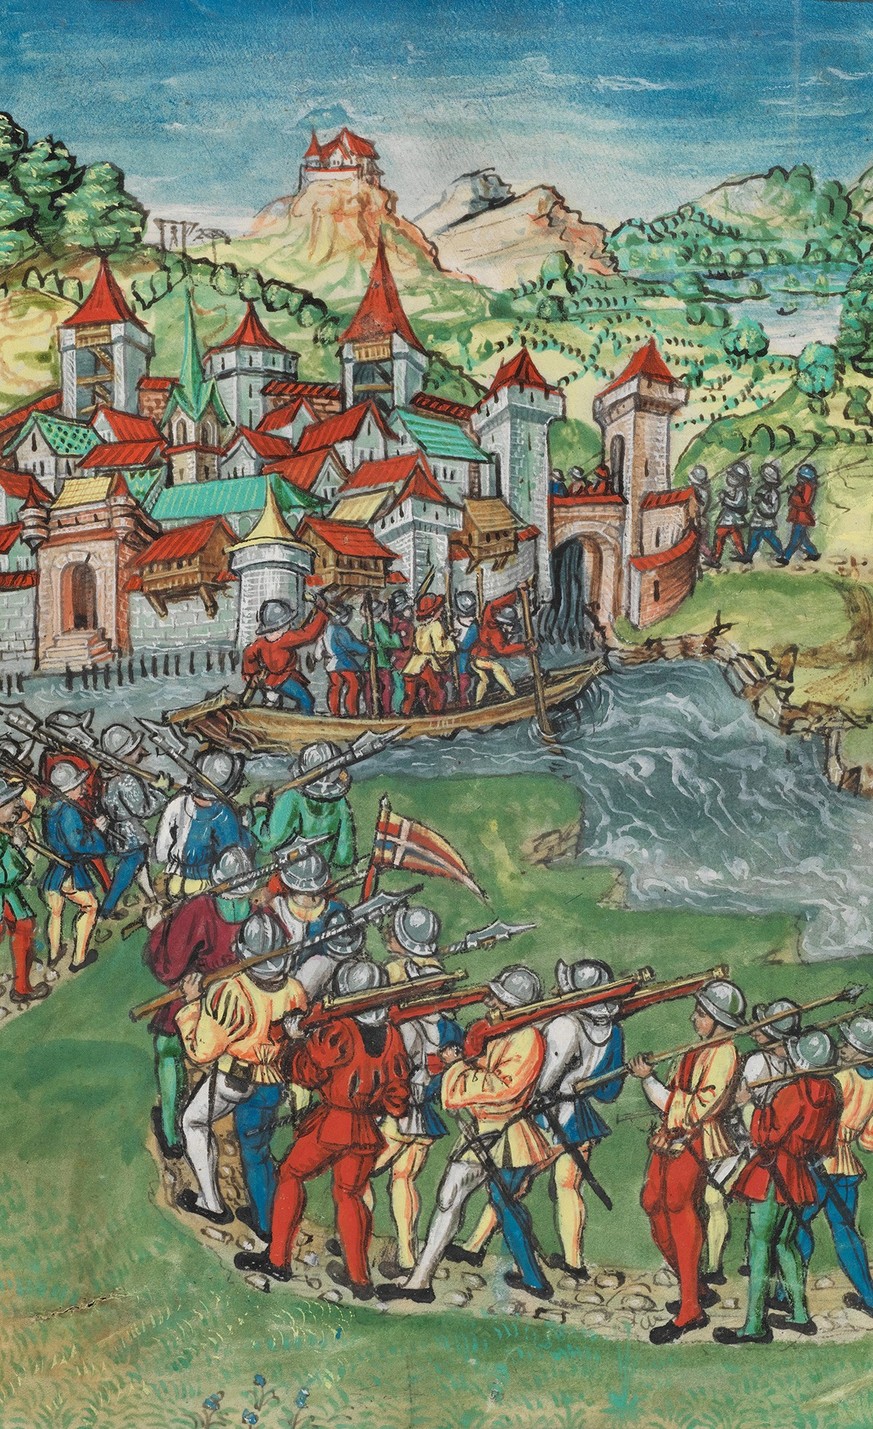 Schweizer Söldner ziehen nach Novara, 1513.
https://www.e-codices.unifr.ch/de/kol/S0023-2//329